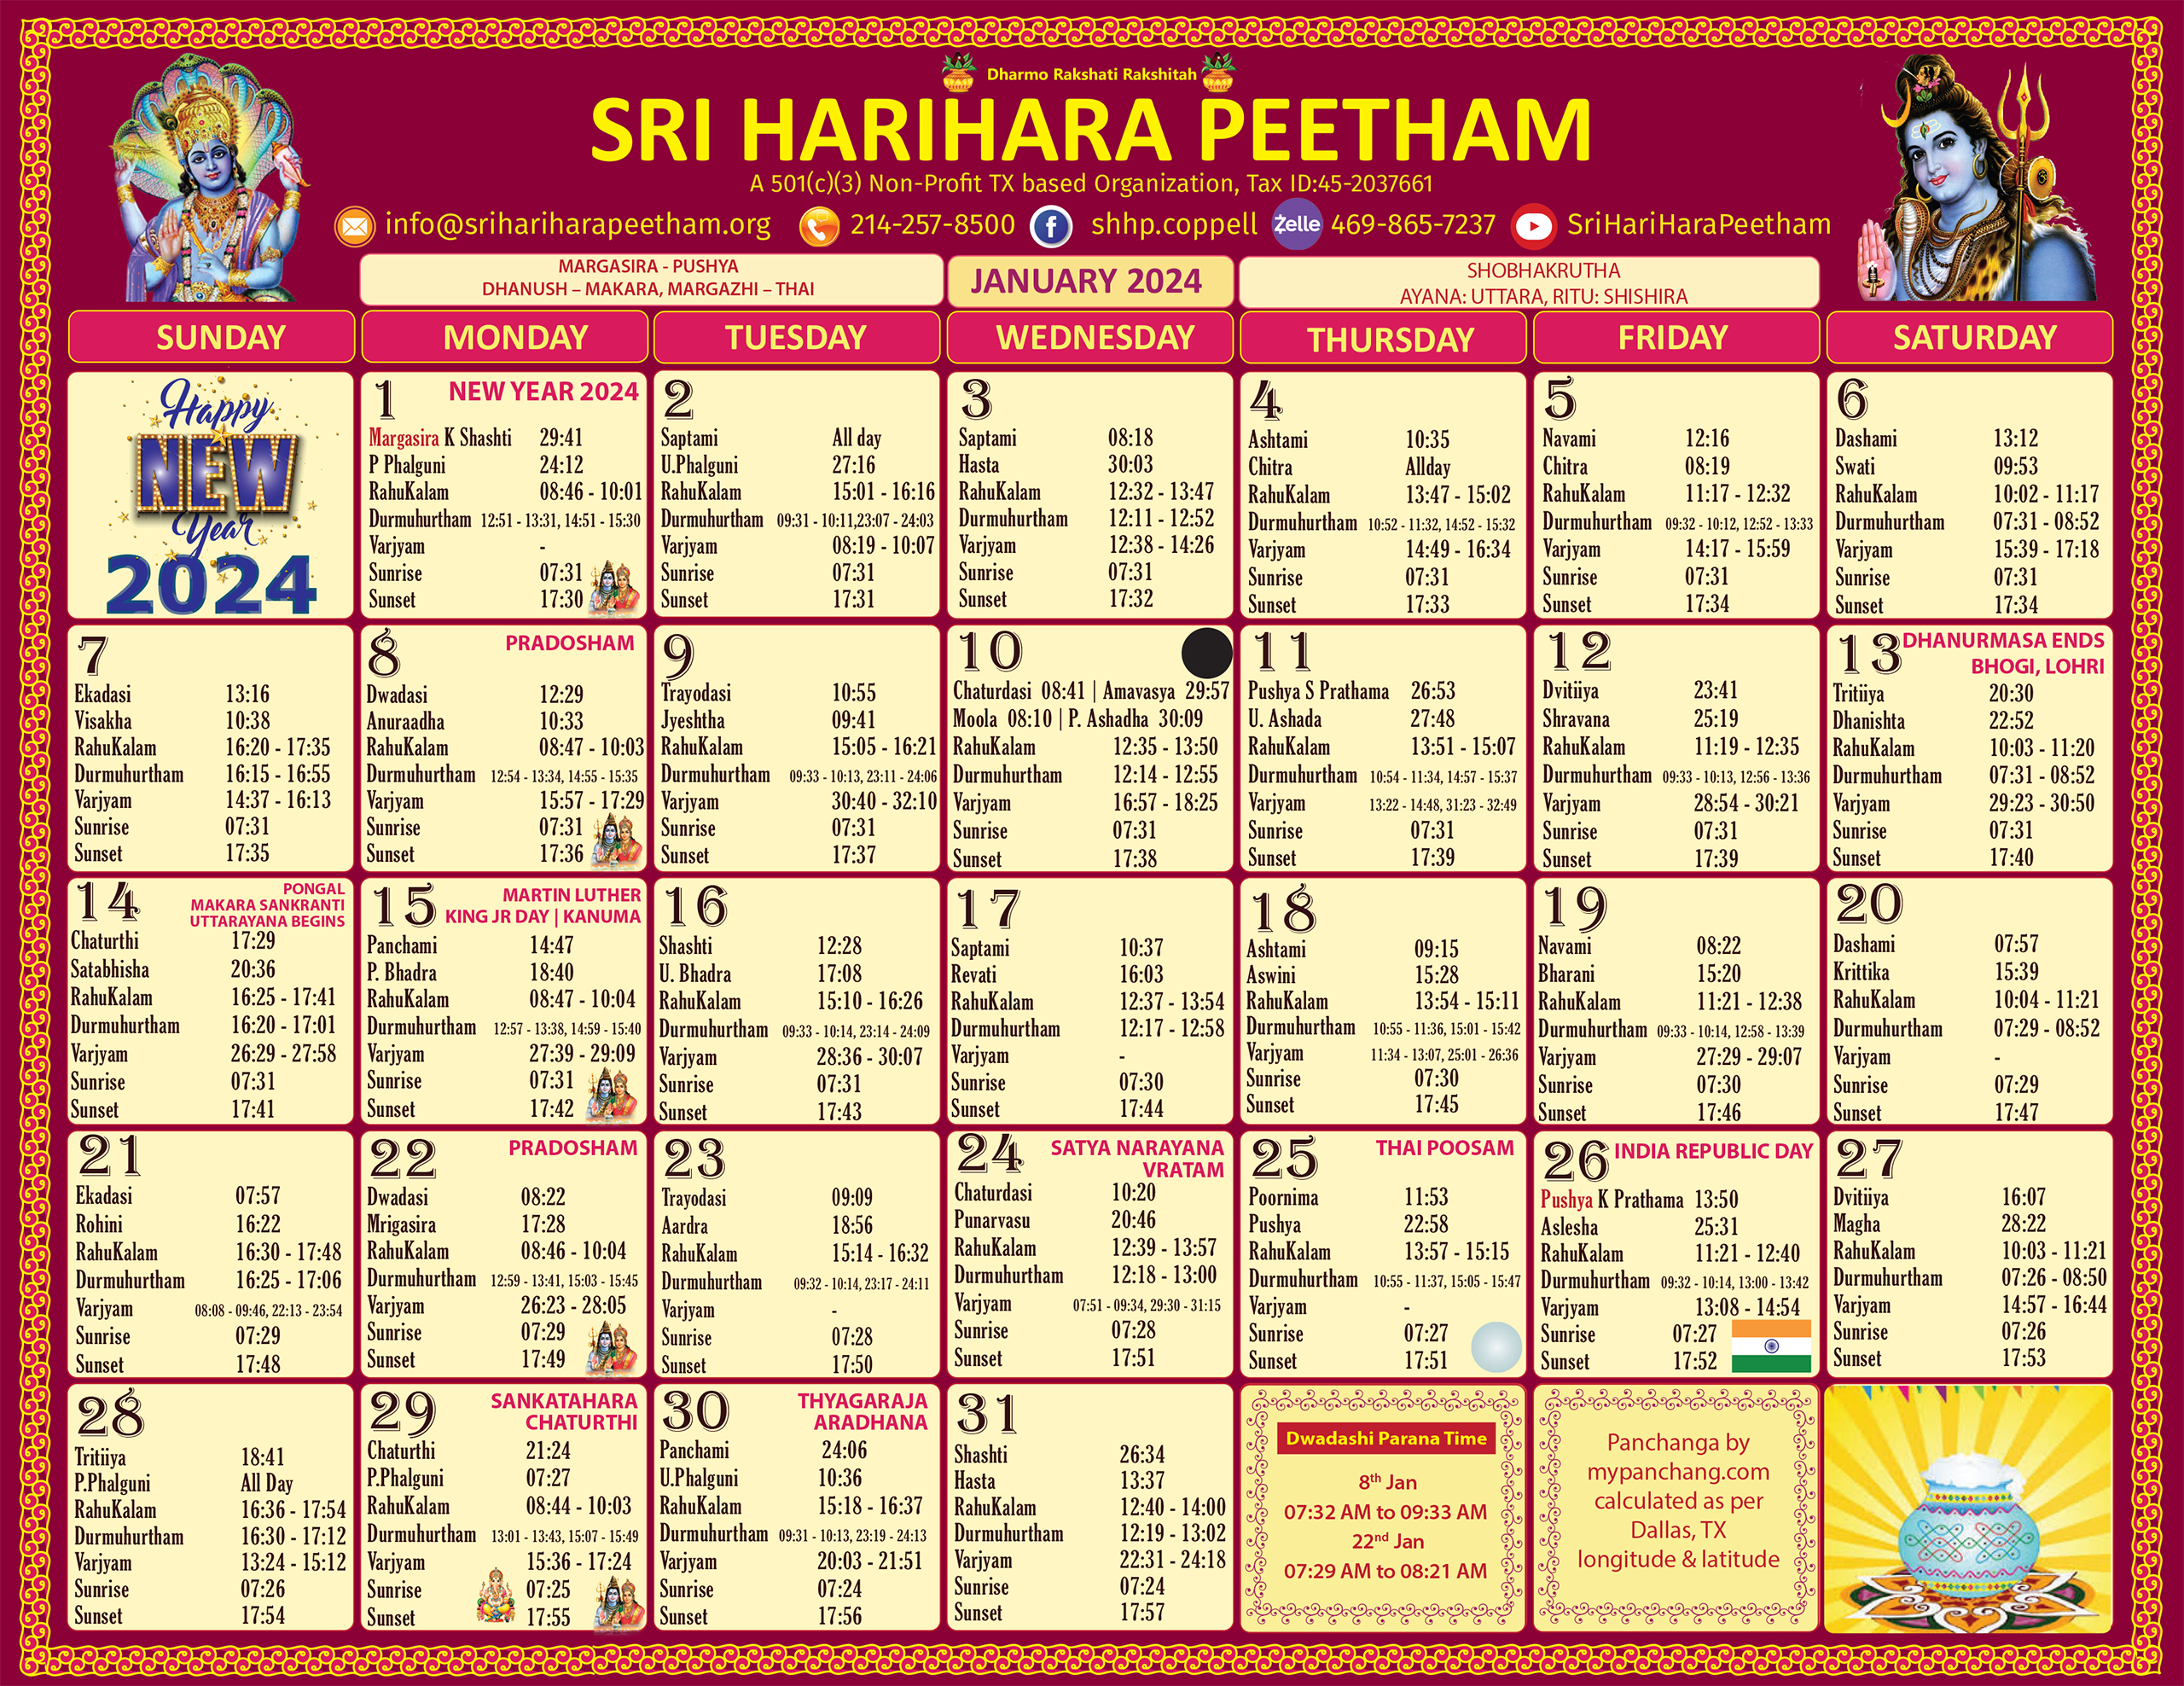 Sri HariHara Peetham's Jaunary 2024 calendar page